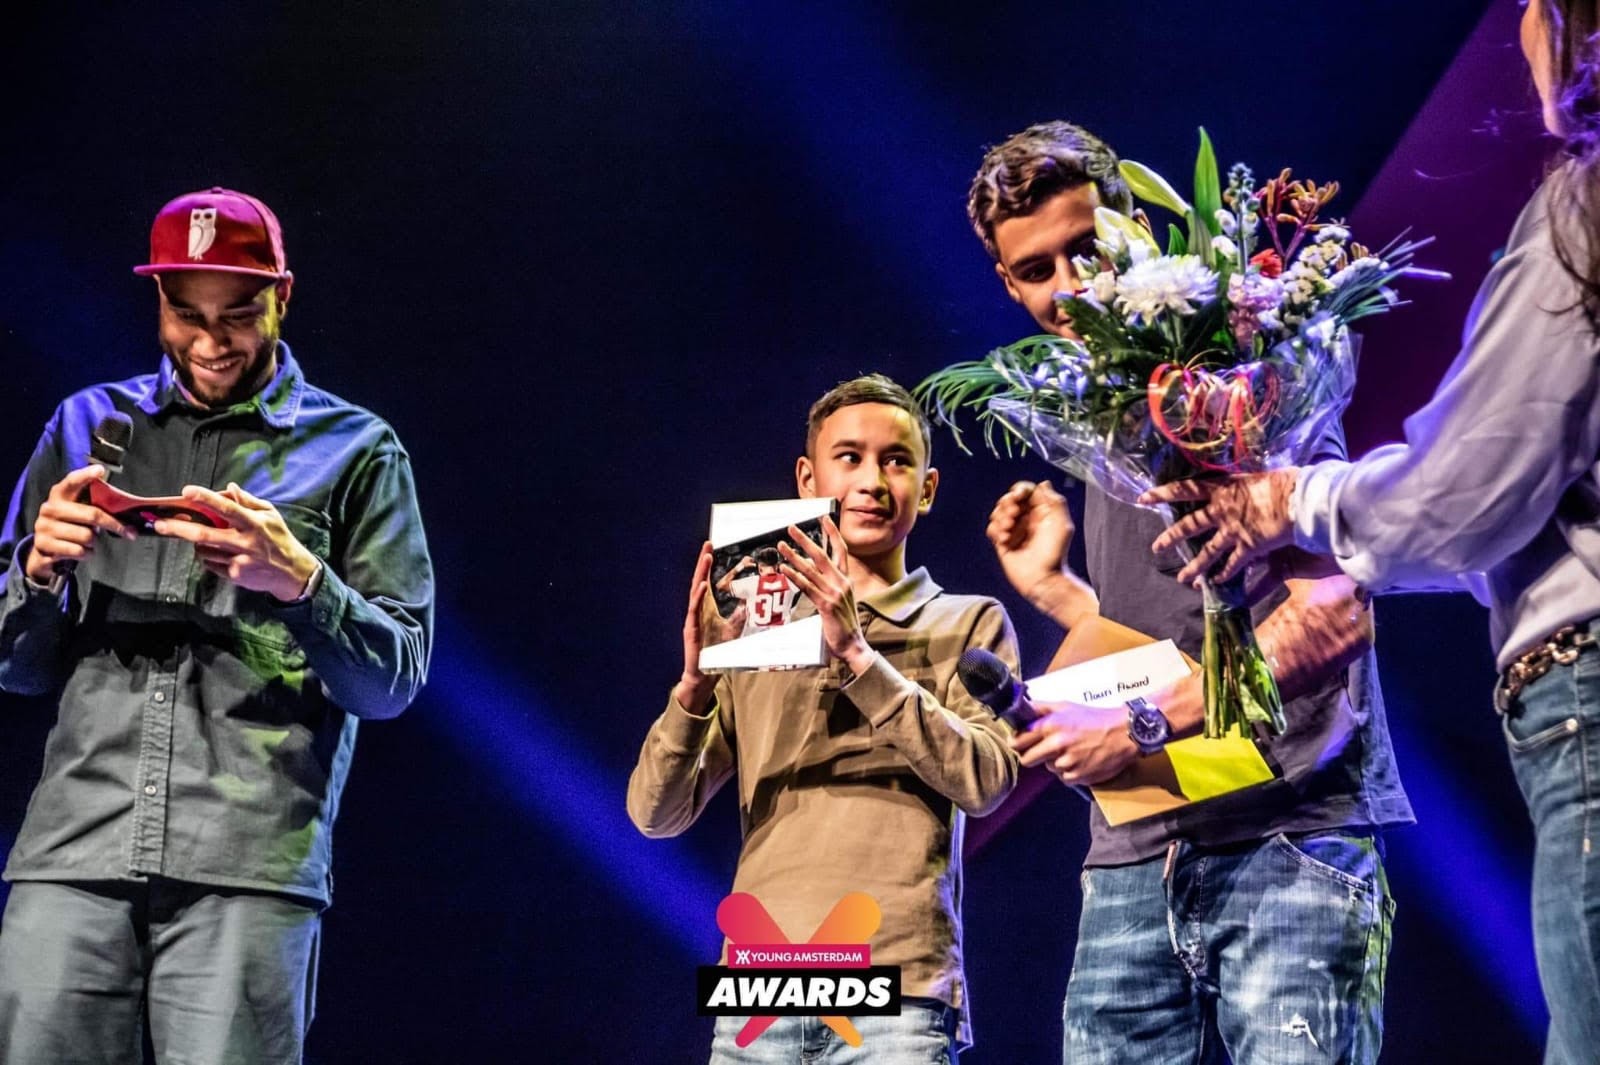 Young Amsterdam Nouri Award